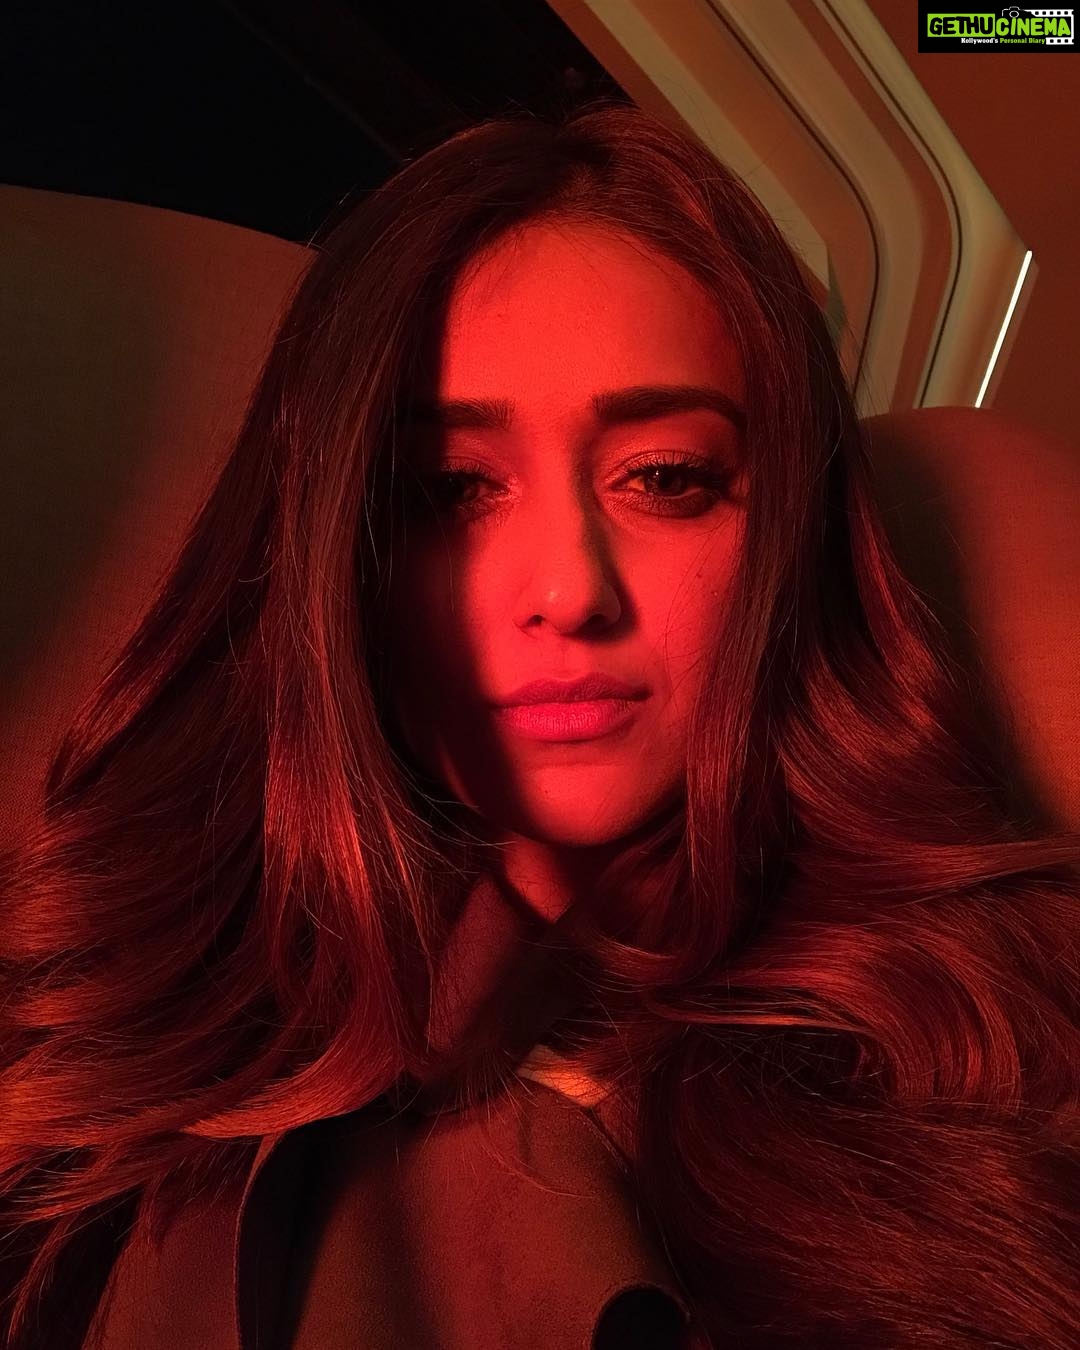 Xxx Ileana Video - Actress Ileana D'Cruz Instagram Photos and Posts April 2017 - Gethu Cinema